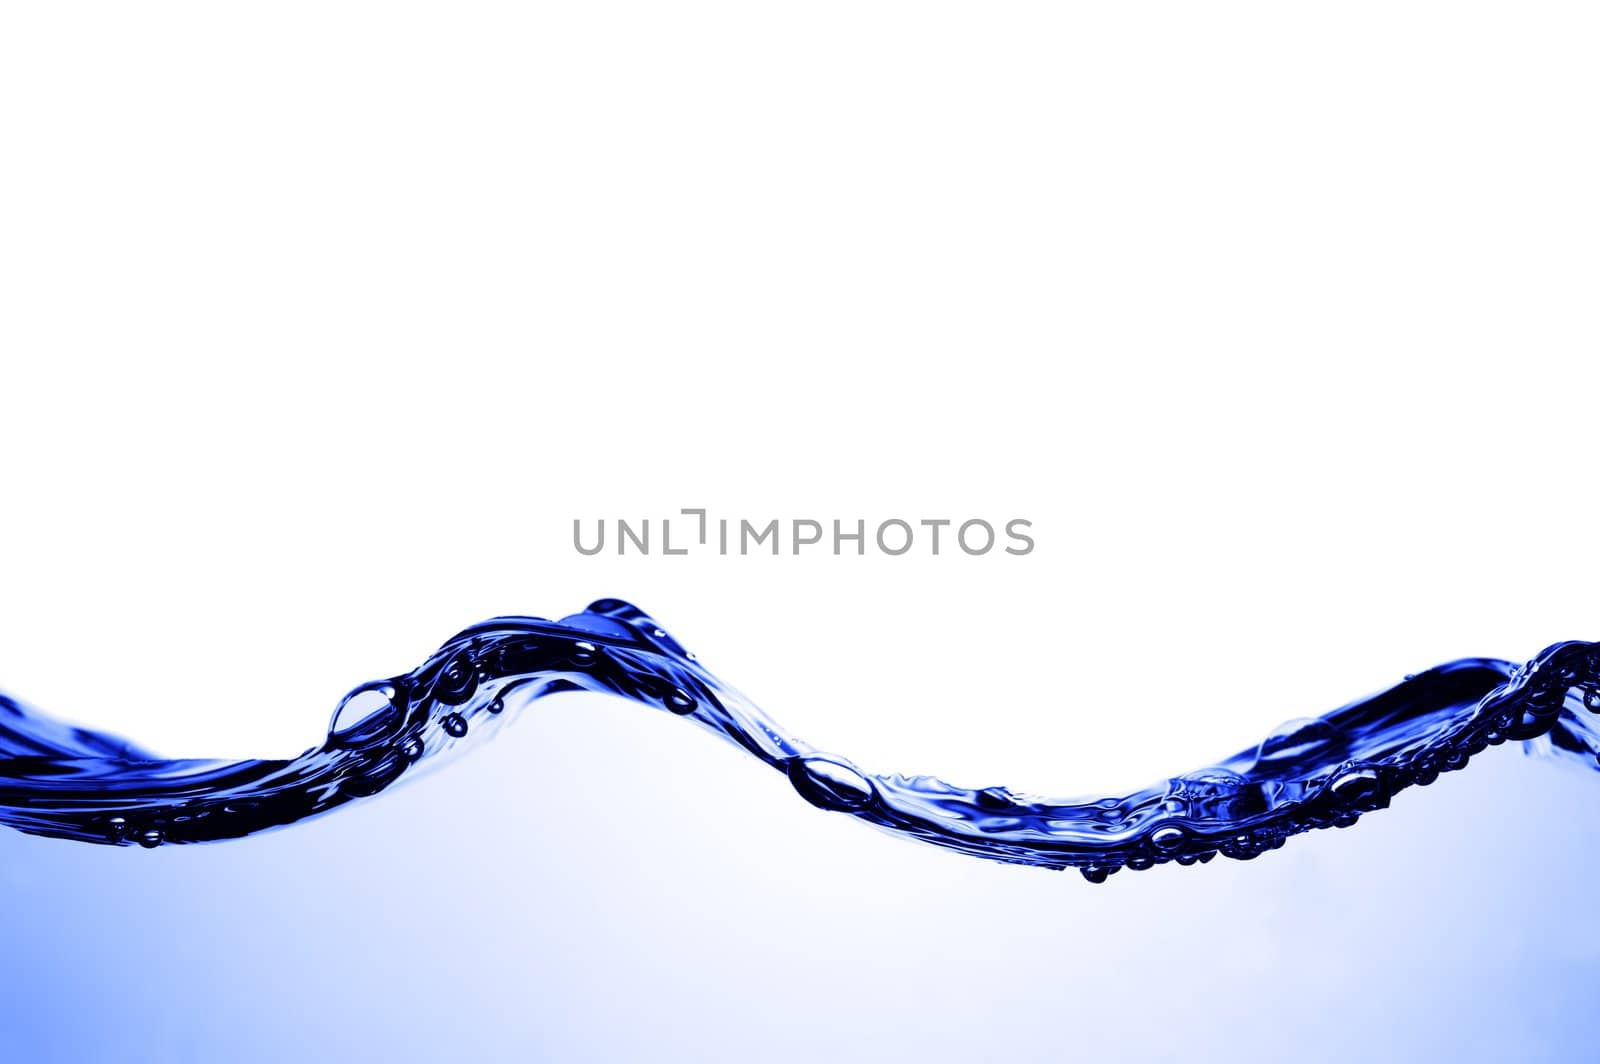 Clear Water by cardmaverick